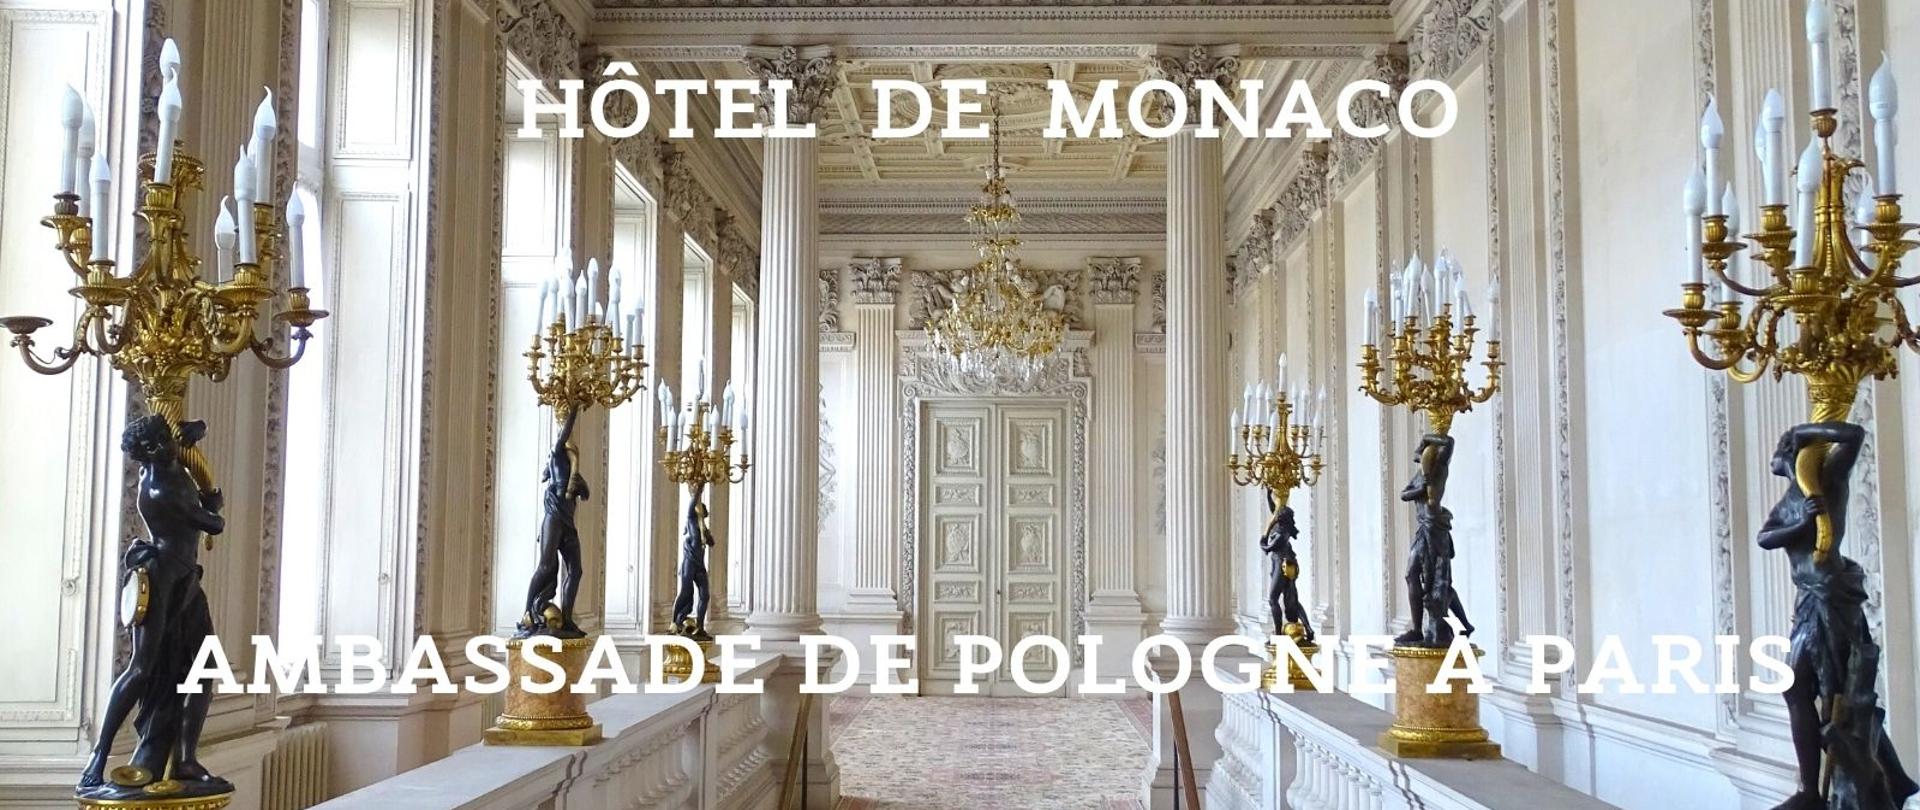 Hotel_de_Monaco_Ambassade_de_Pologne_depuis_1936_(1)